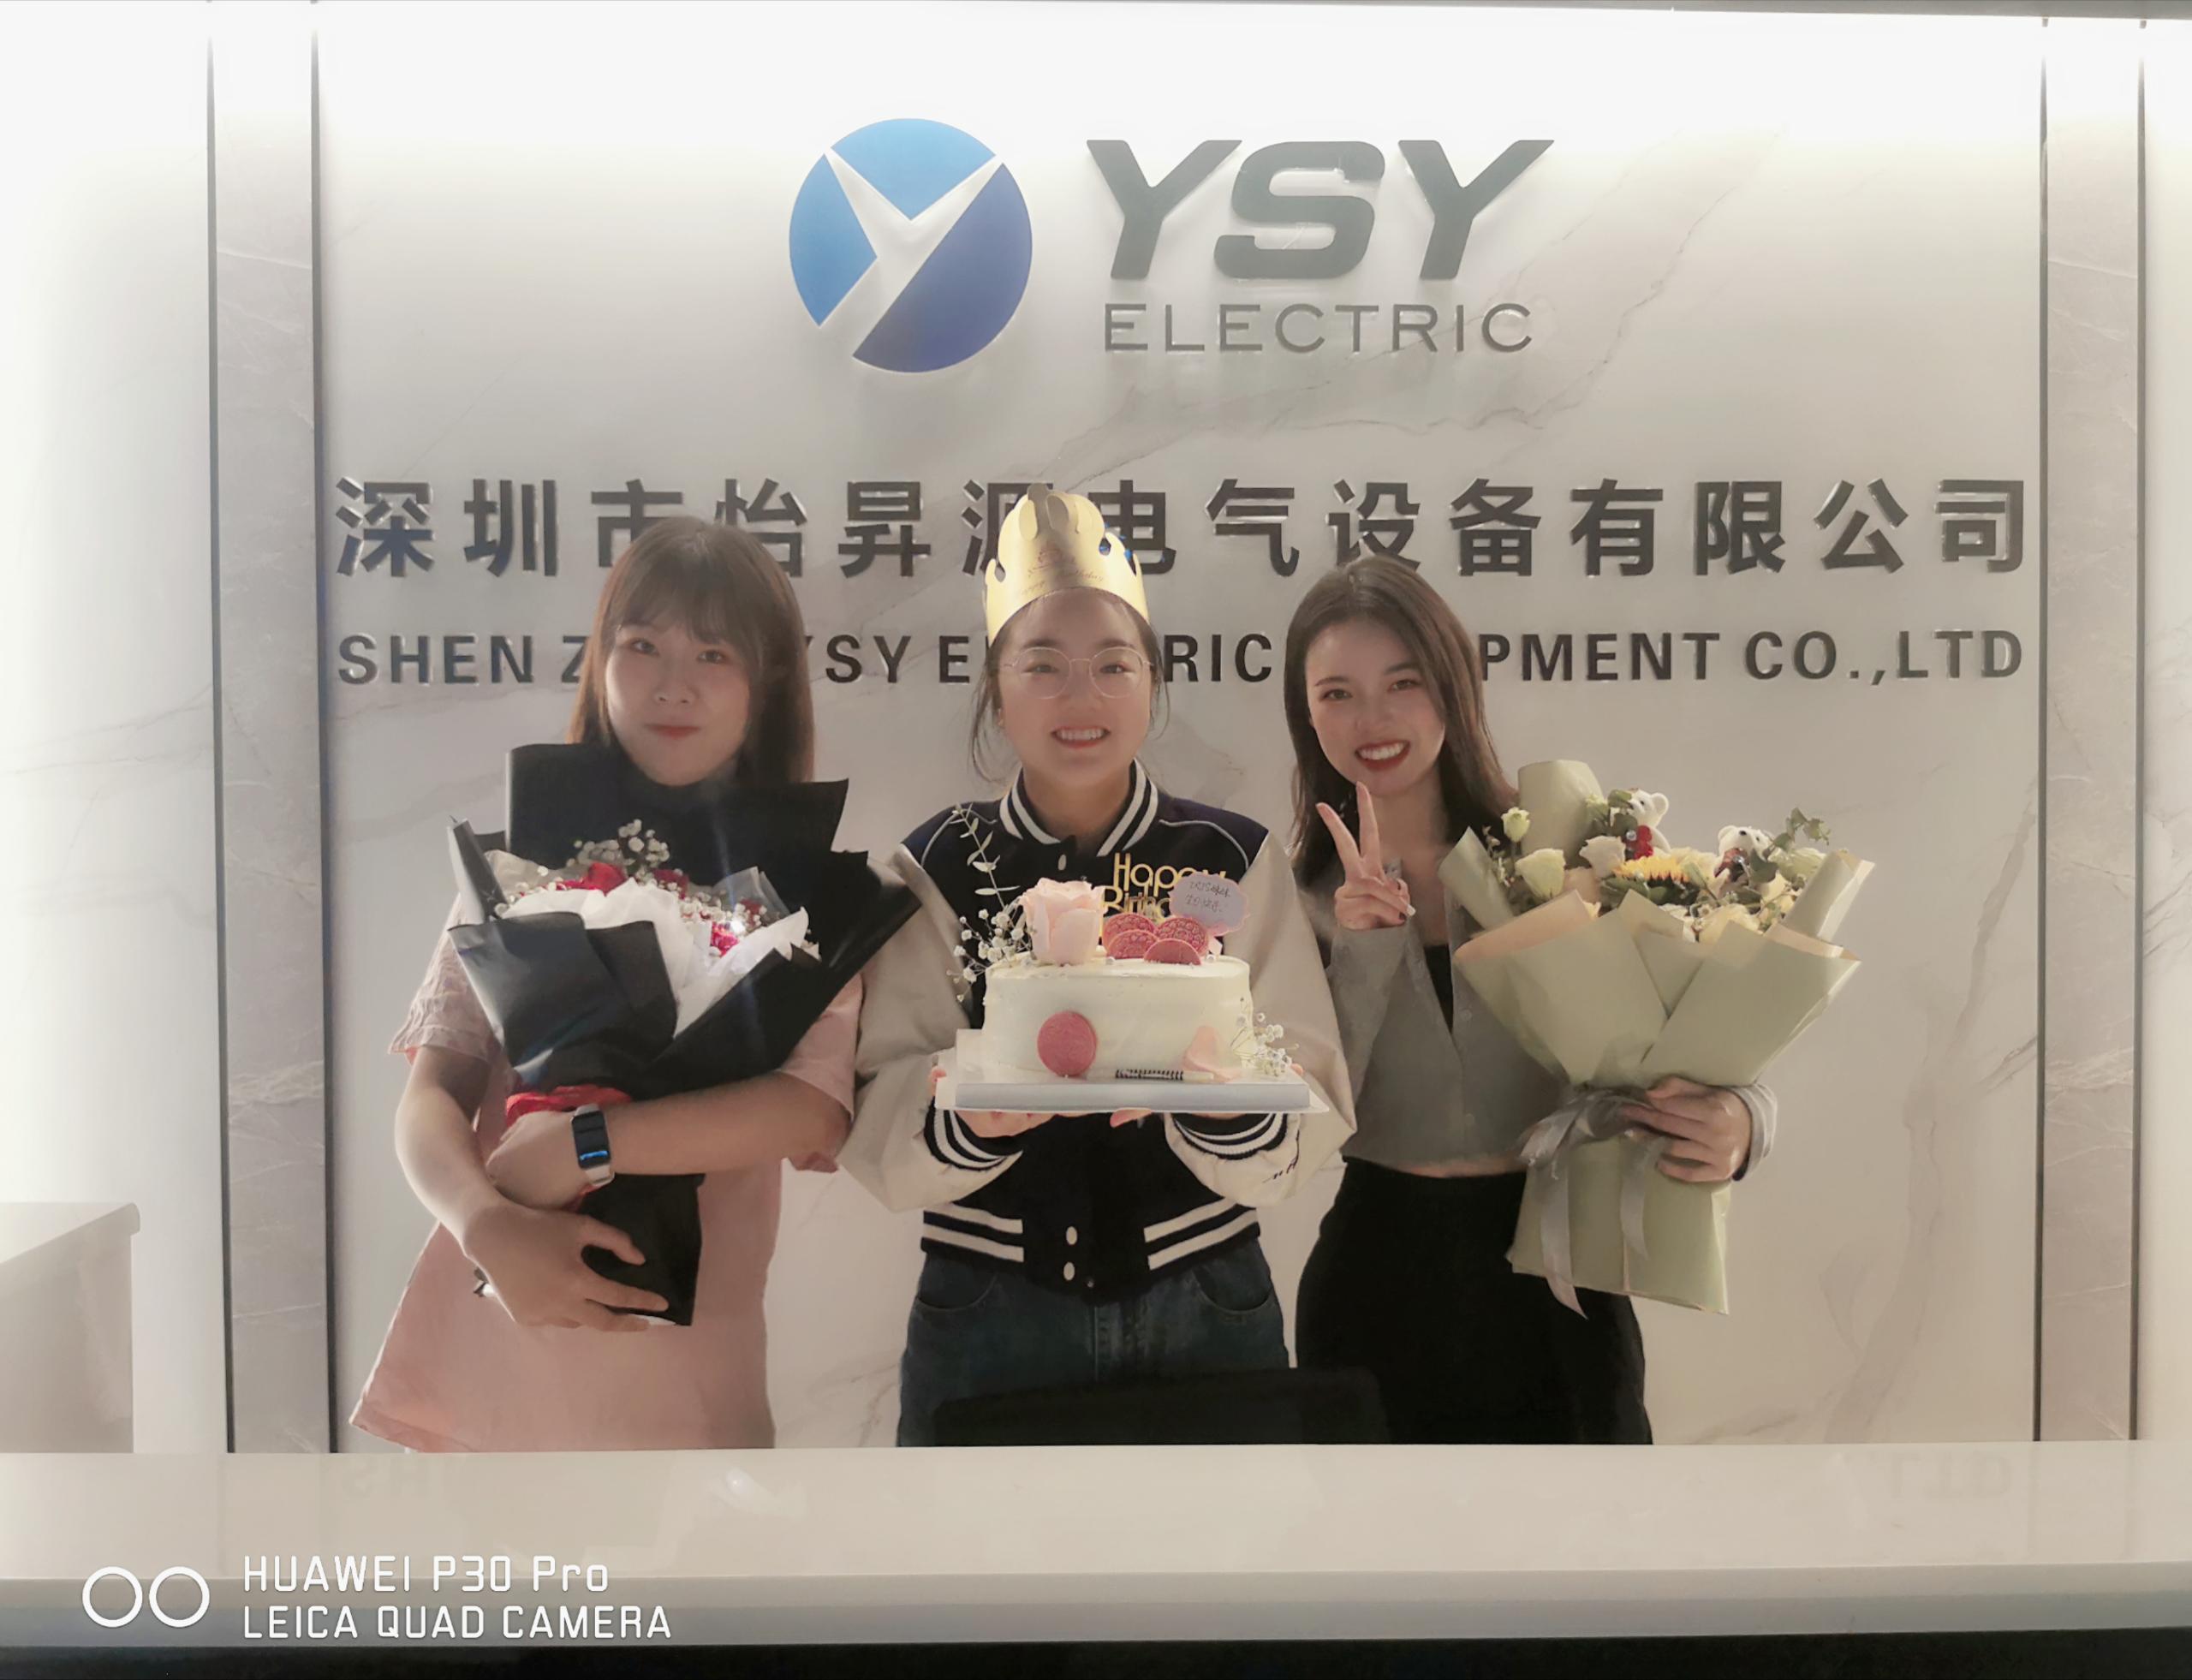 Sretan rođendan 2 prodaje YSY Electric!